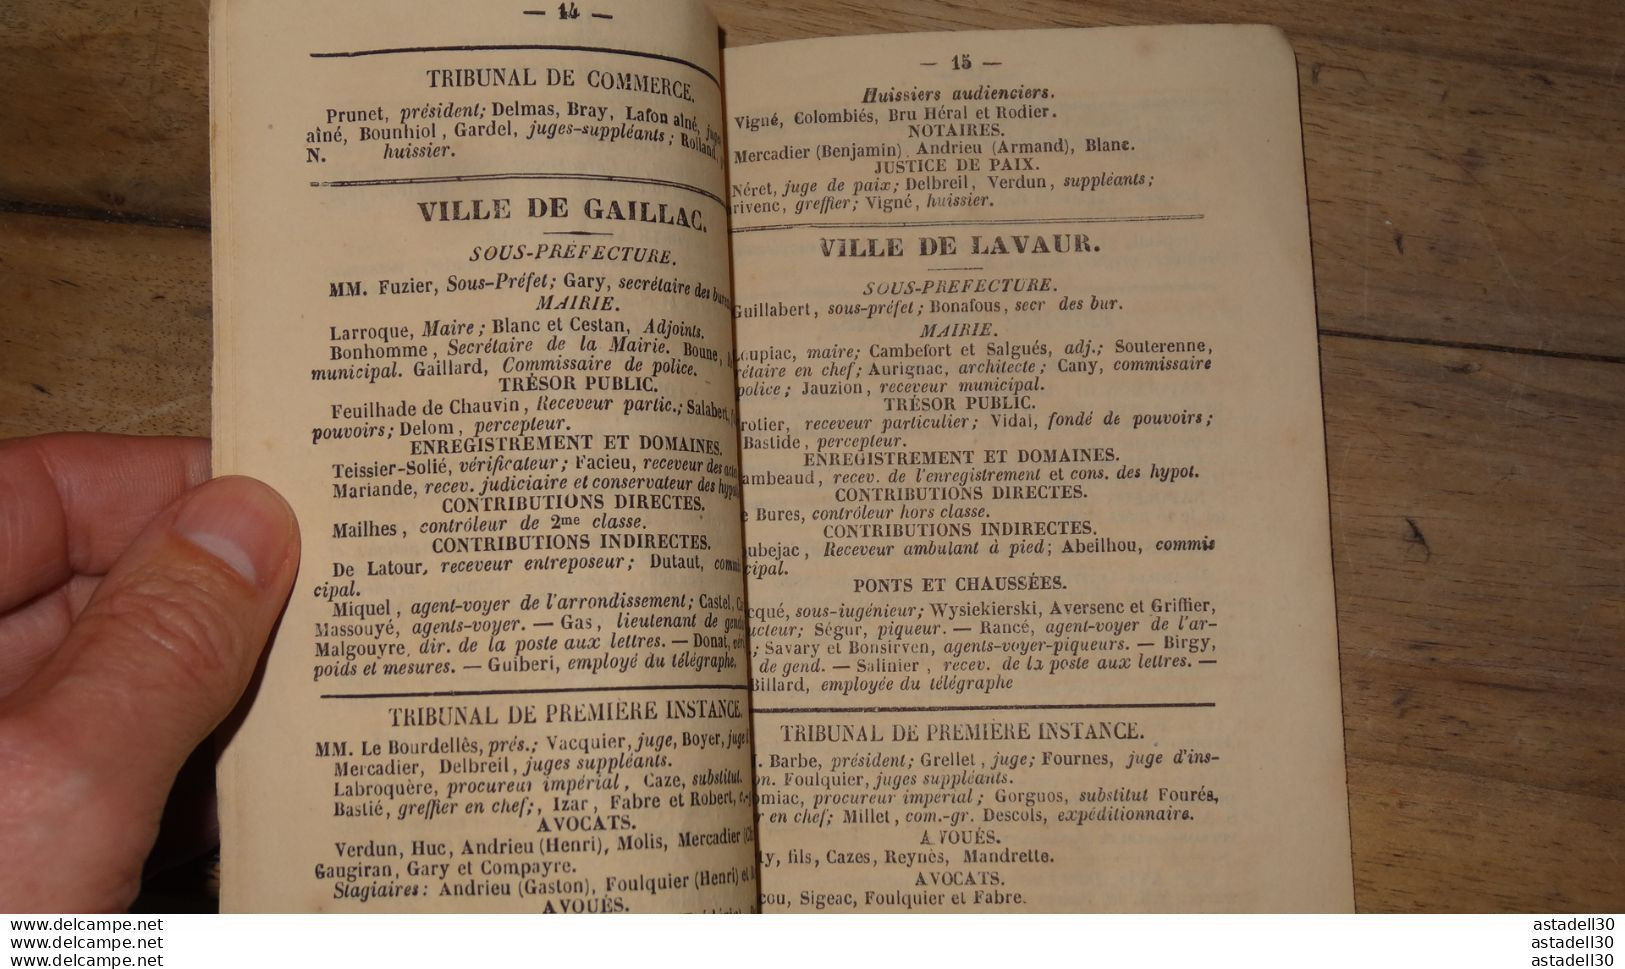 Almanach Du Tarn Pour L'année 1870 ............. PHI..... E2-3 - Tamaño Pequeño : ...-1900